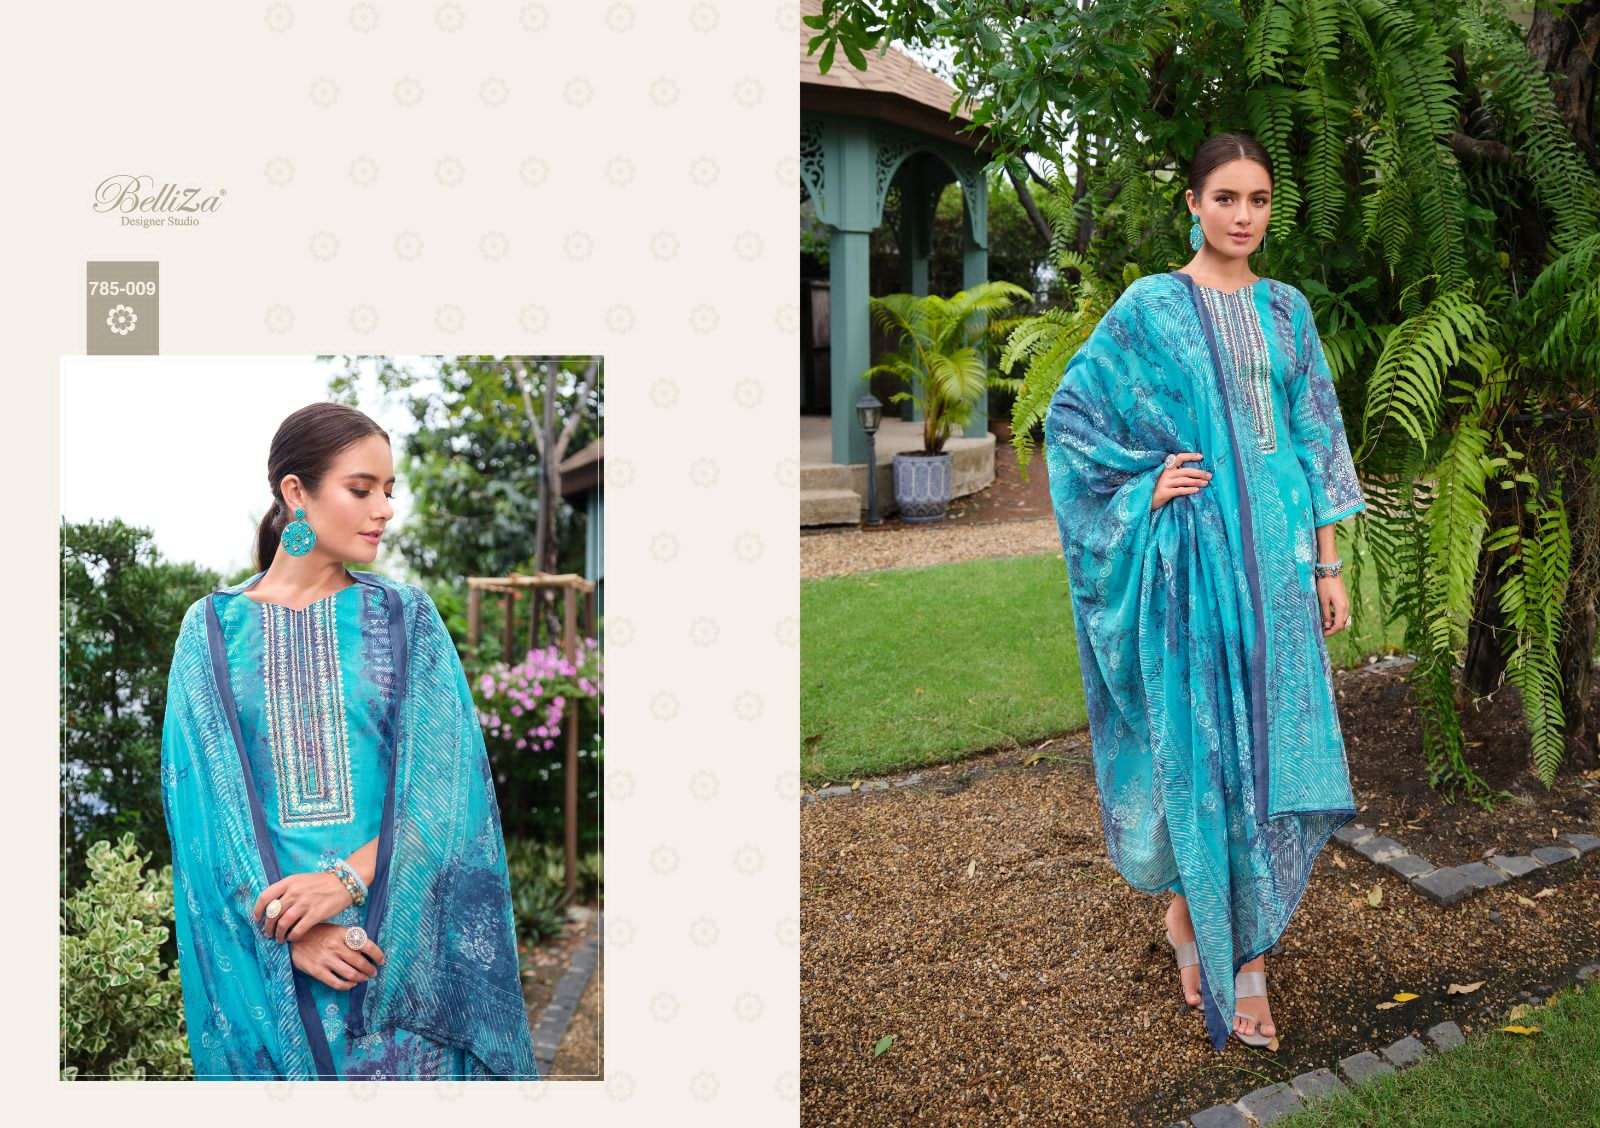 belliza designer studio resham 785-001-010 series latest designer salwar kameez wholesaler surat gujarat